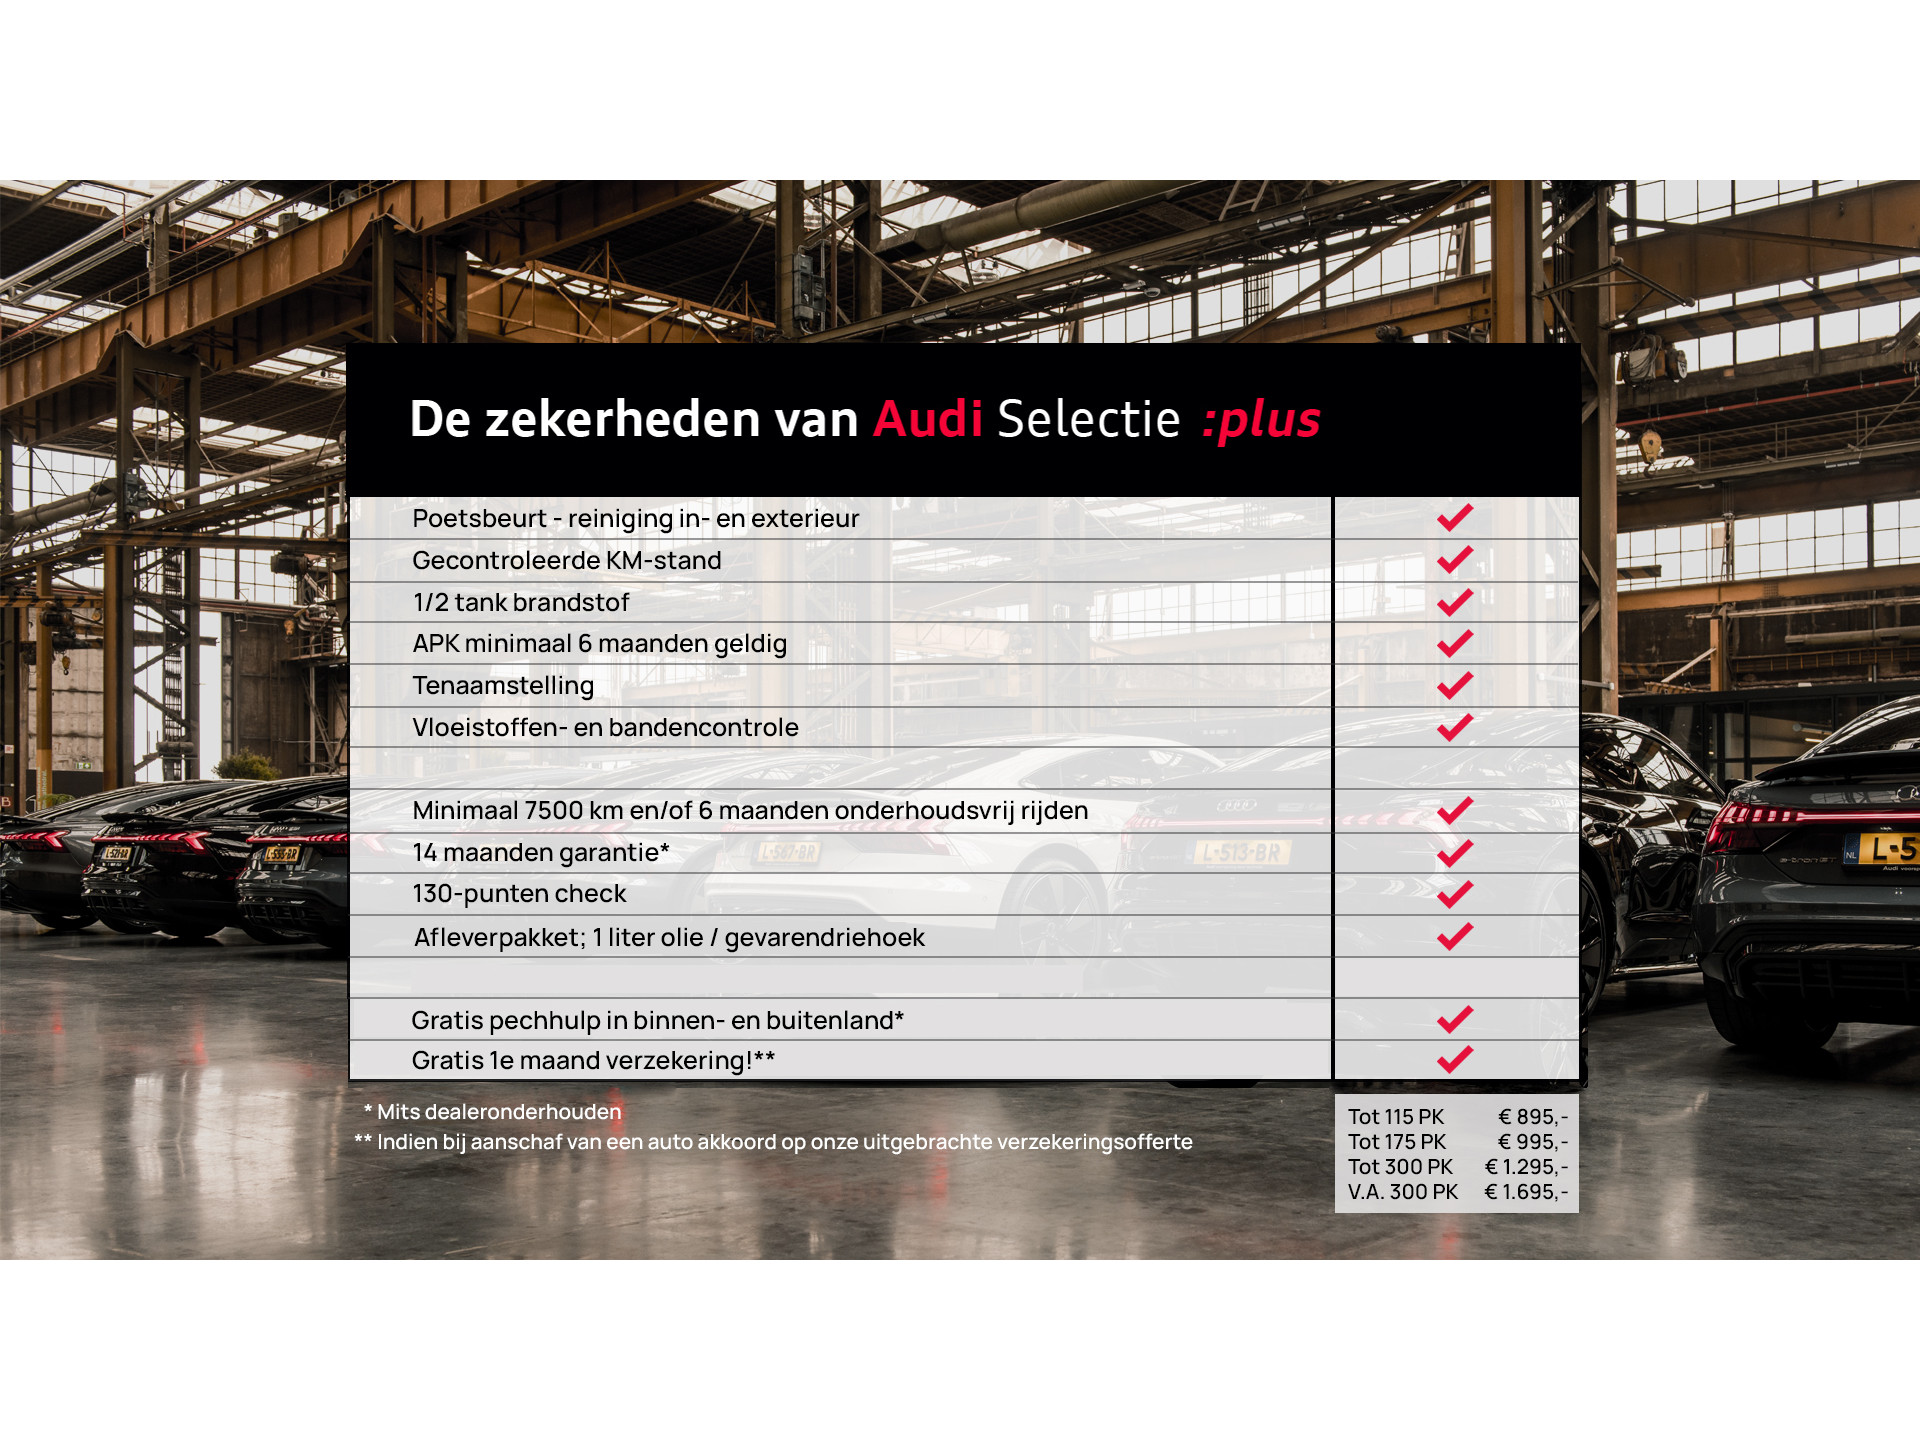 Audi - Q5 2.0 TFSI quattro Sport S Line Edition - 2019